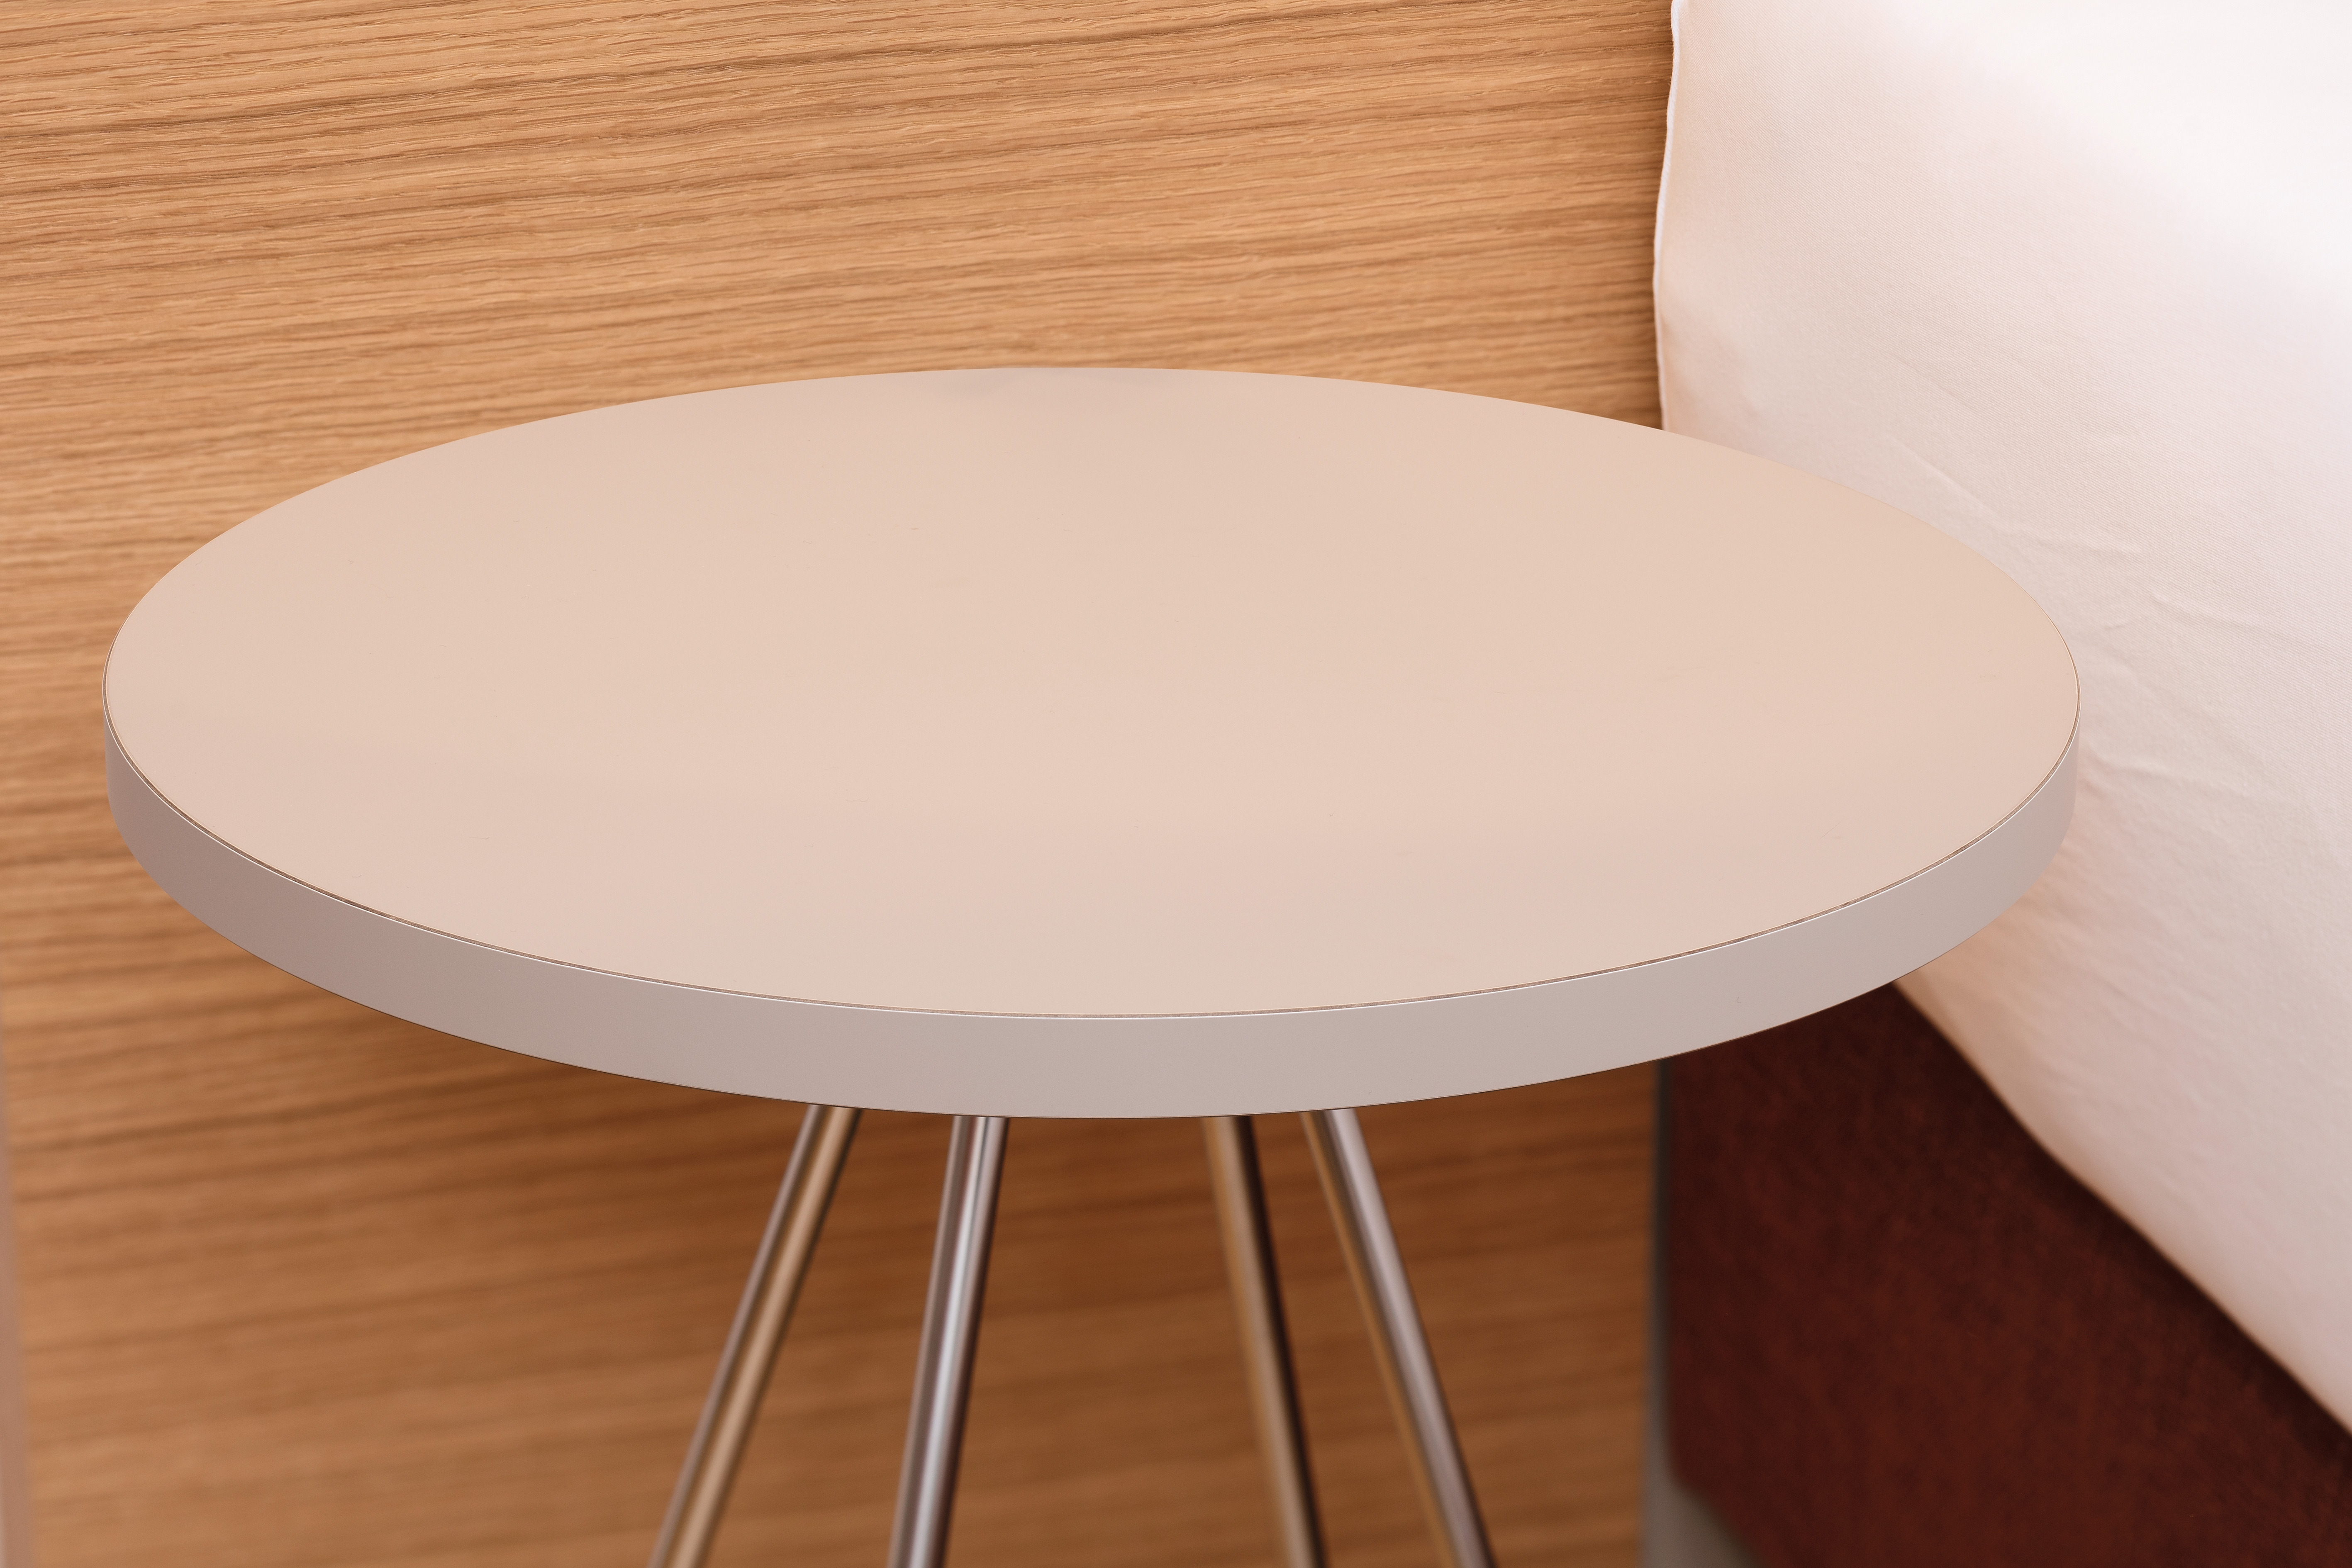 A superfície da mesa foi feita com o robusto termolaminado PerfectSense.